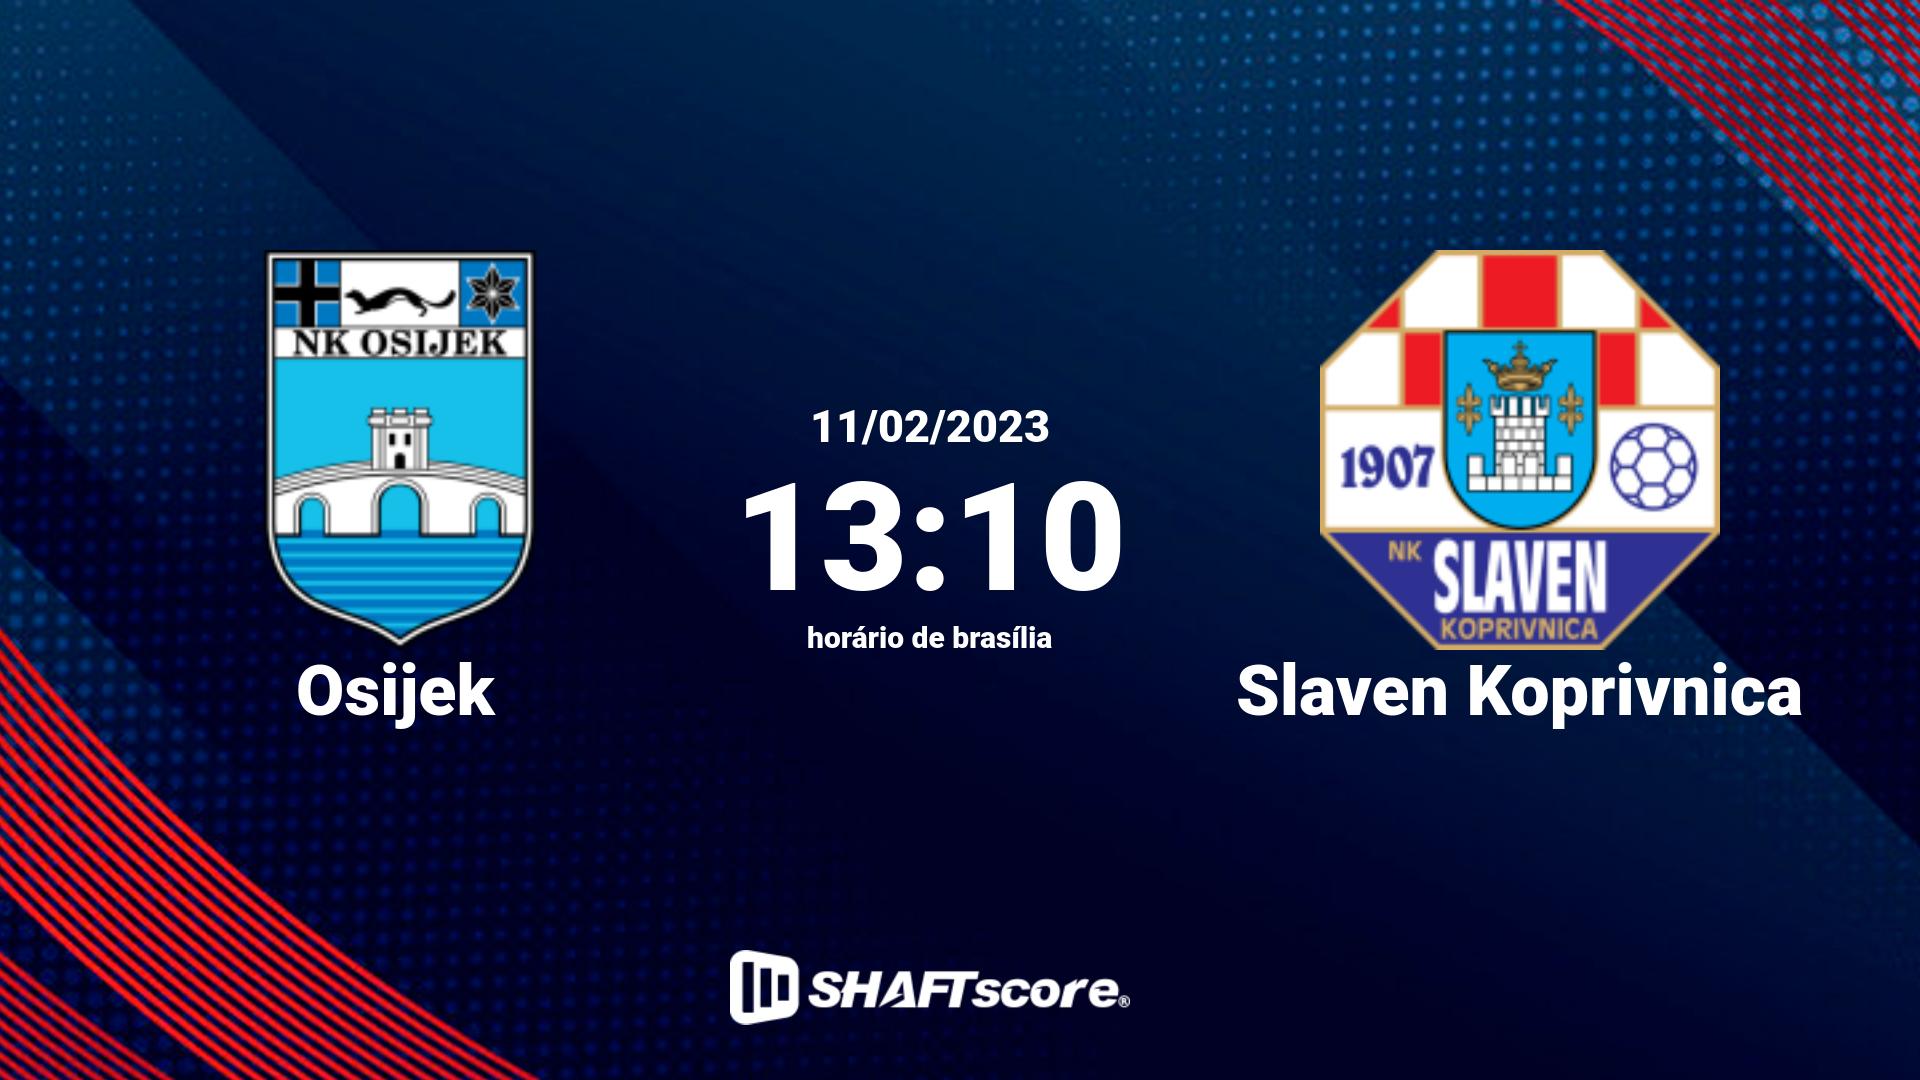 Estatísticas do jogo Osijek vs Slaven Koprivnica 11.02 13:10